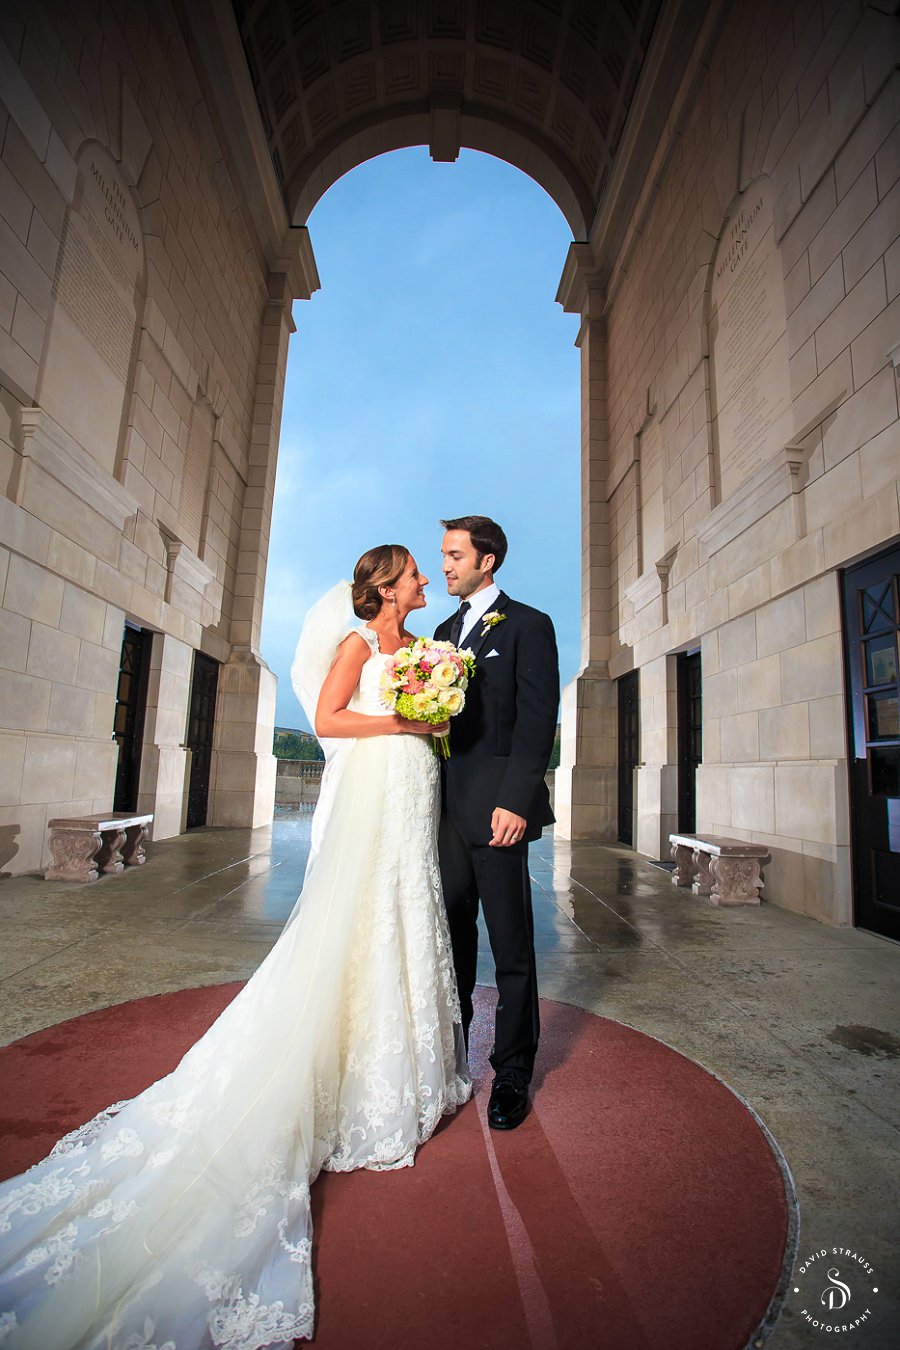 Atlanta Wedding Photography - Charleston Photographer David Strauss - Claire and Kyle - 21